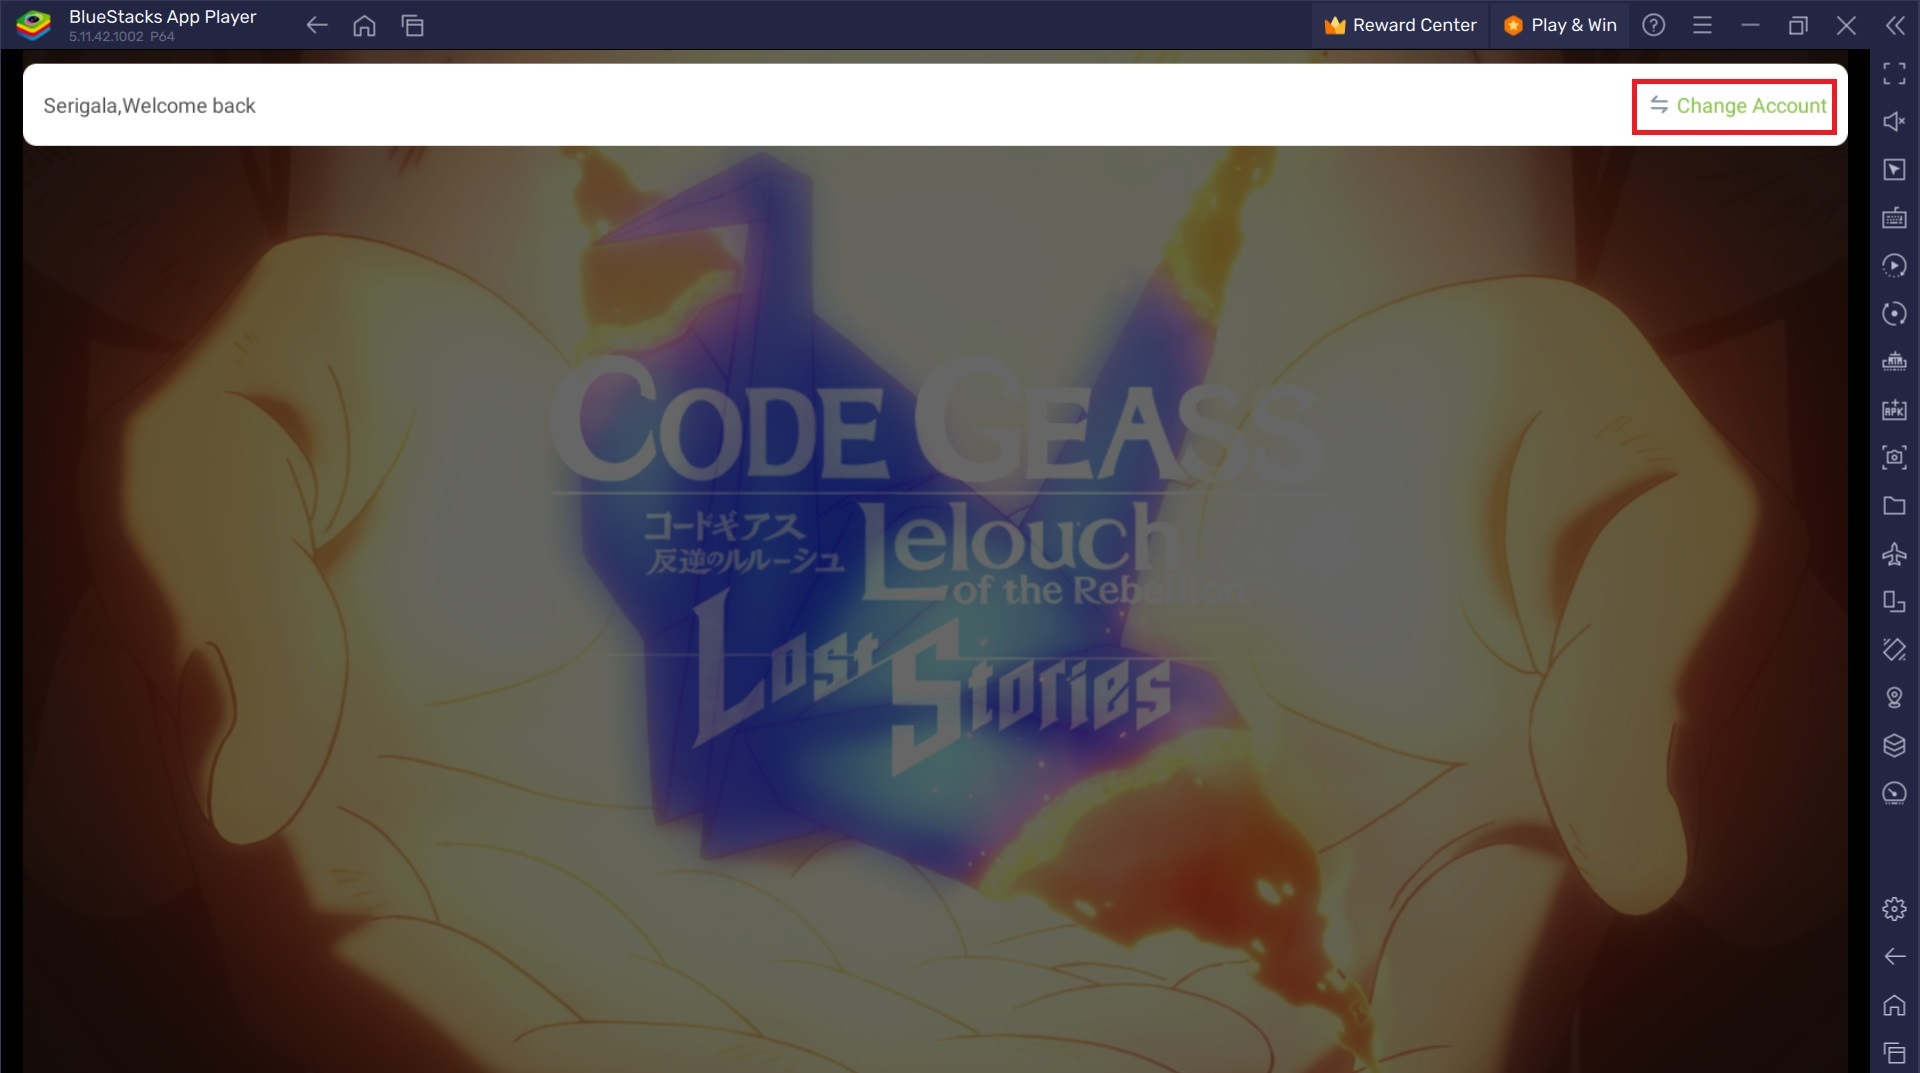 Panduan Cara Bermain Code Geass: Lost Stories untuk Pemula di PC Menggunakan Bluestacks